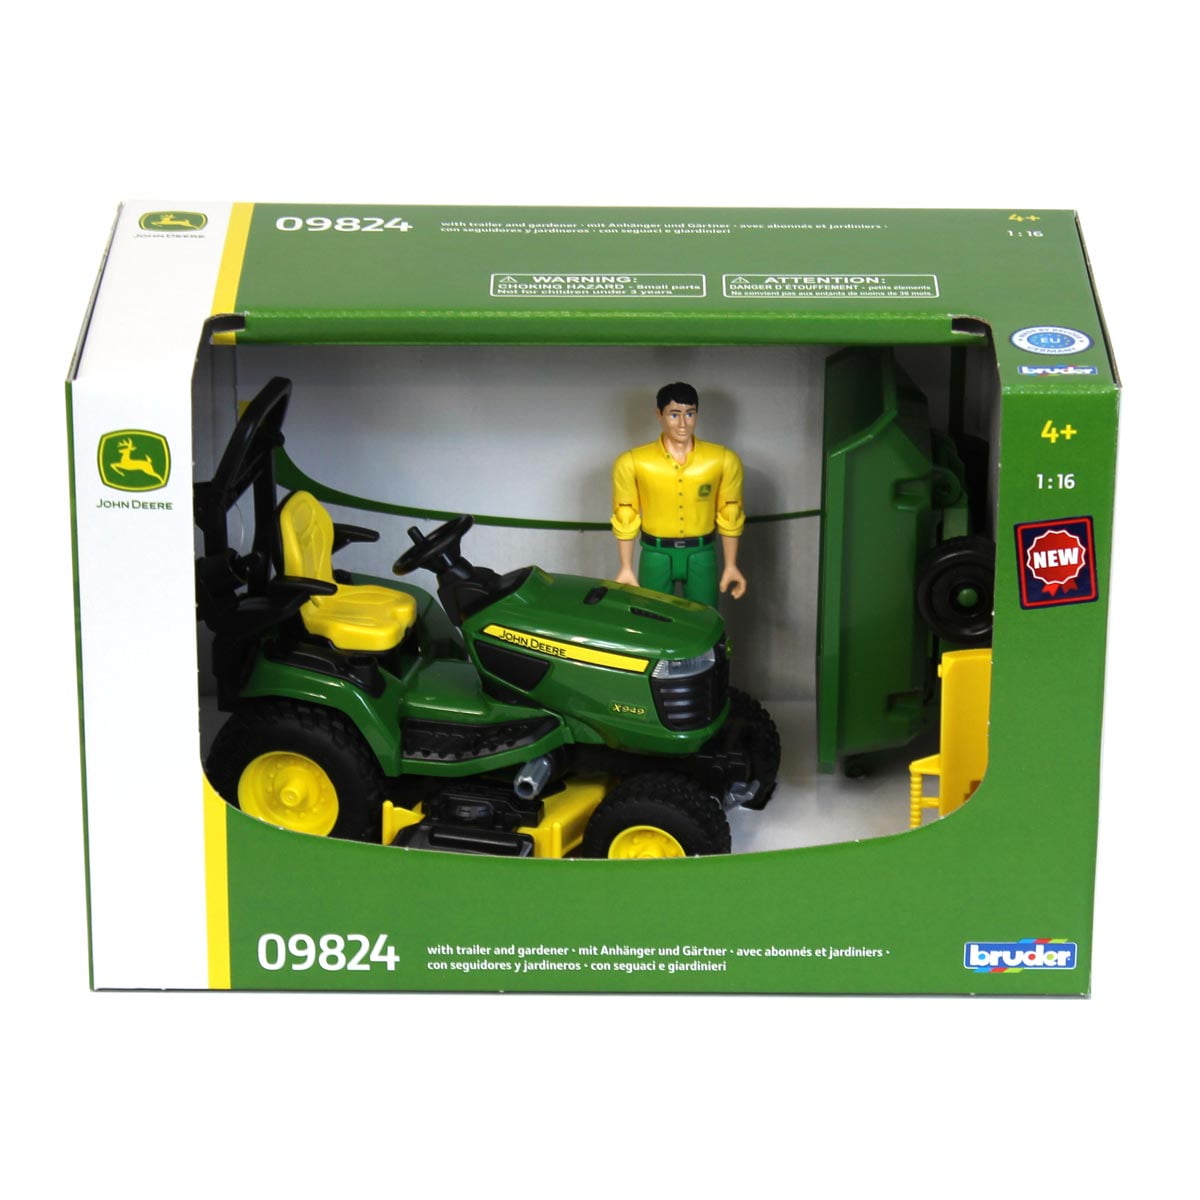 1/16 John Deere x949 Lawn Mower Tractor W/ Trailer & Gardener by Bruder 09824 